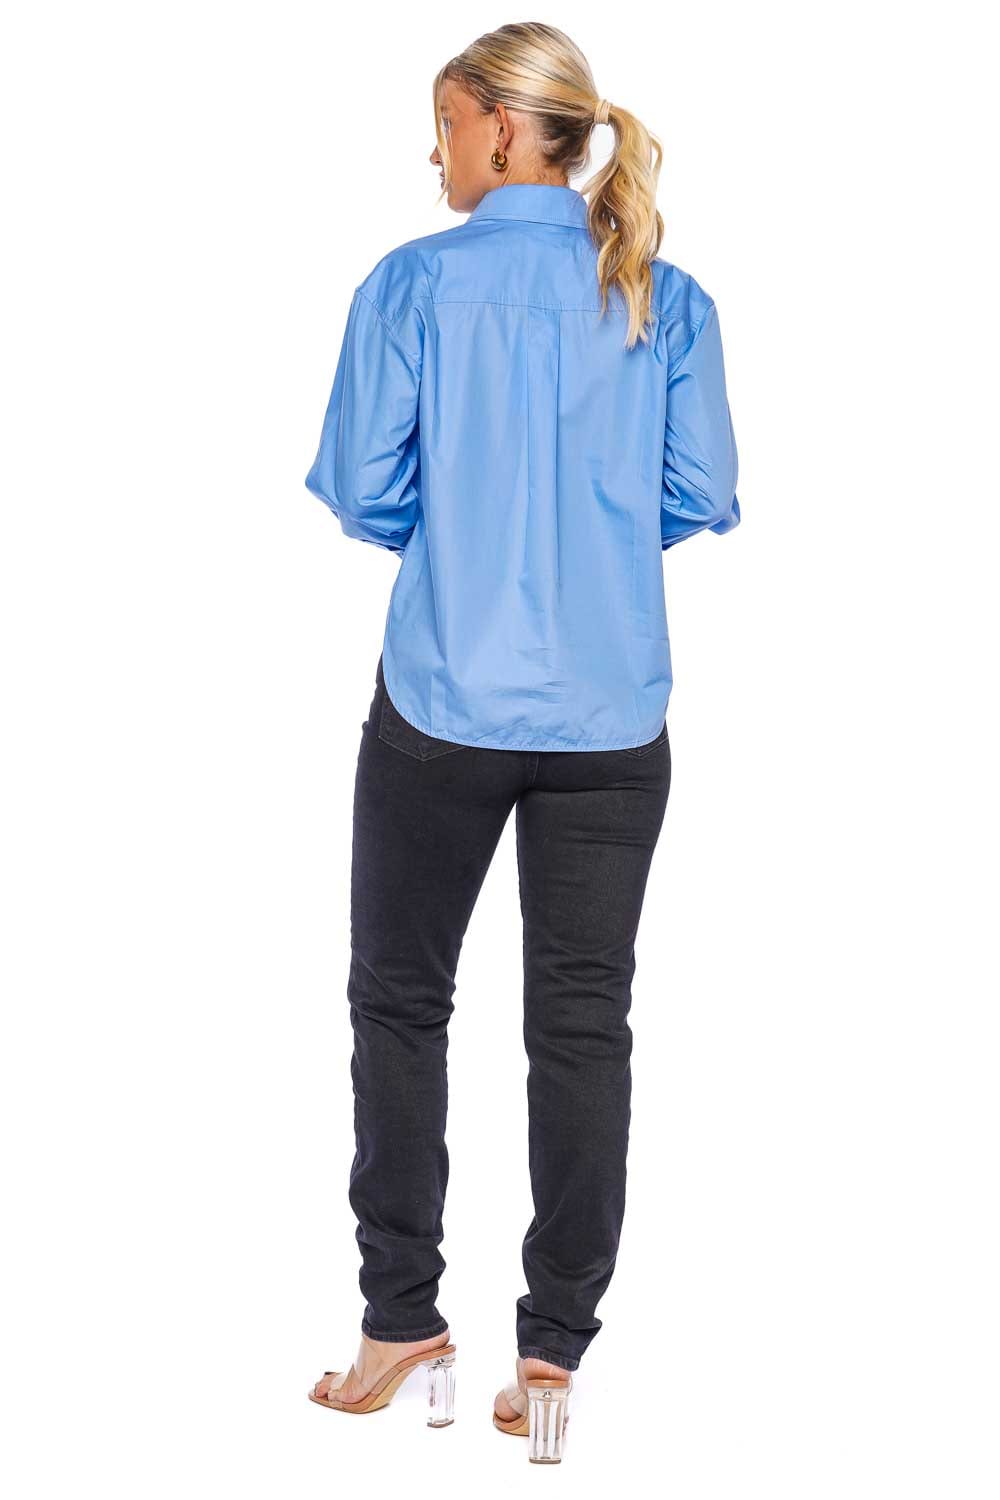 Victoria Beckham Cropped Long Sleeve Shirt 1124WSH005238A OXFORD BLUE